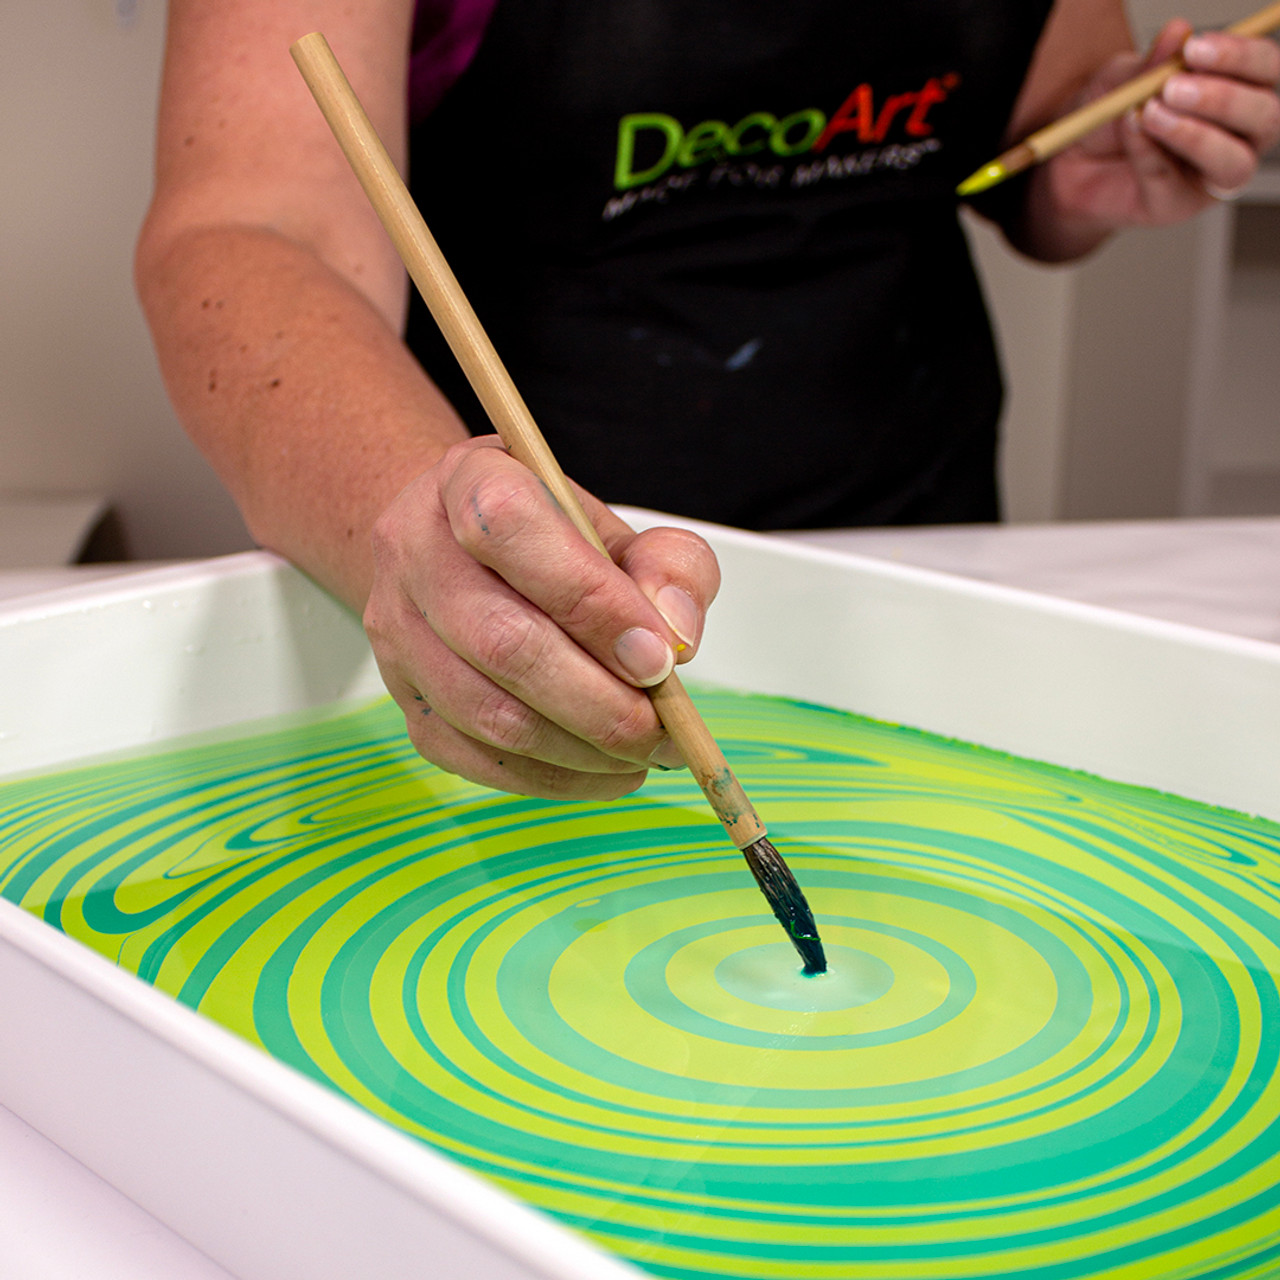 Marbling Paint Kit Environmentally Friendly Diy Water Art Craft Drawing  Tools Supplies